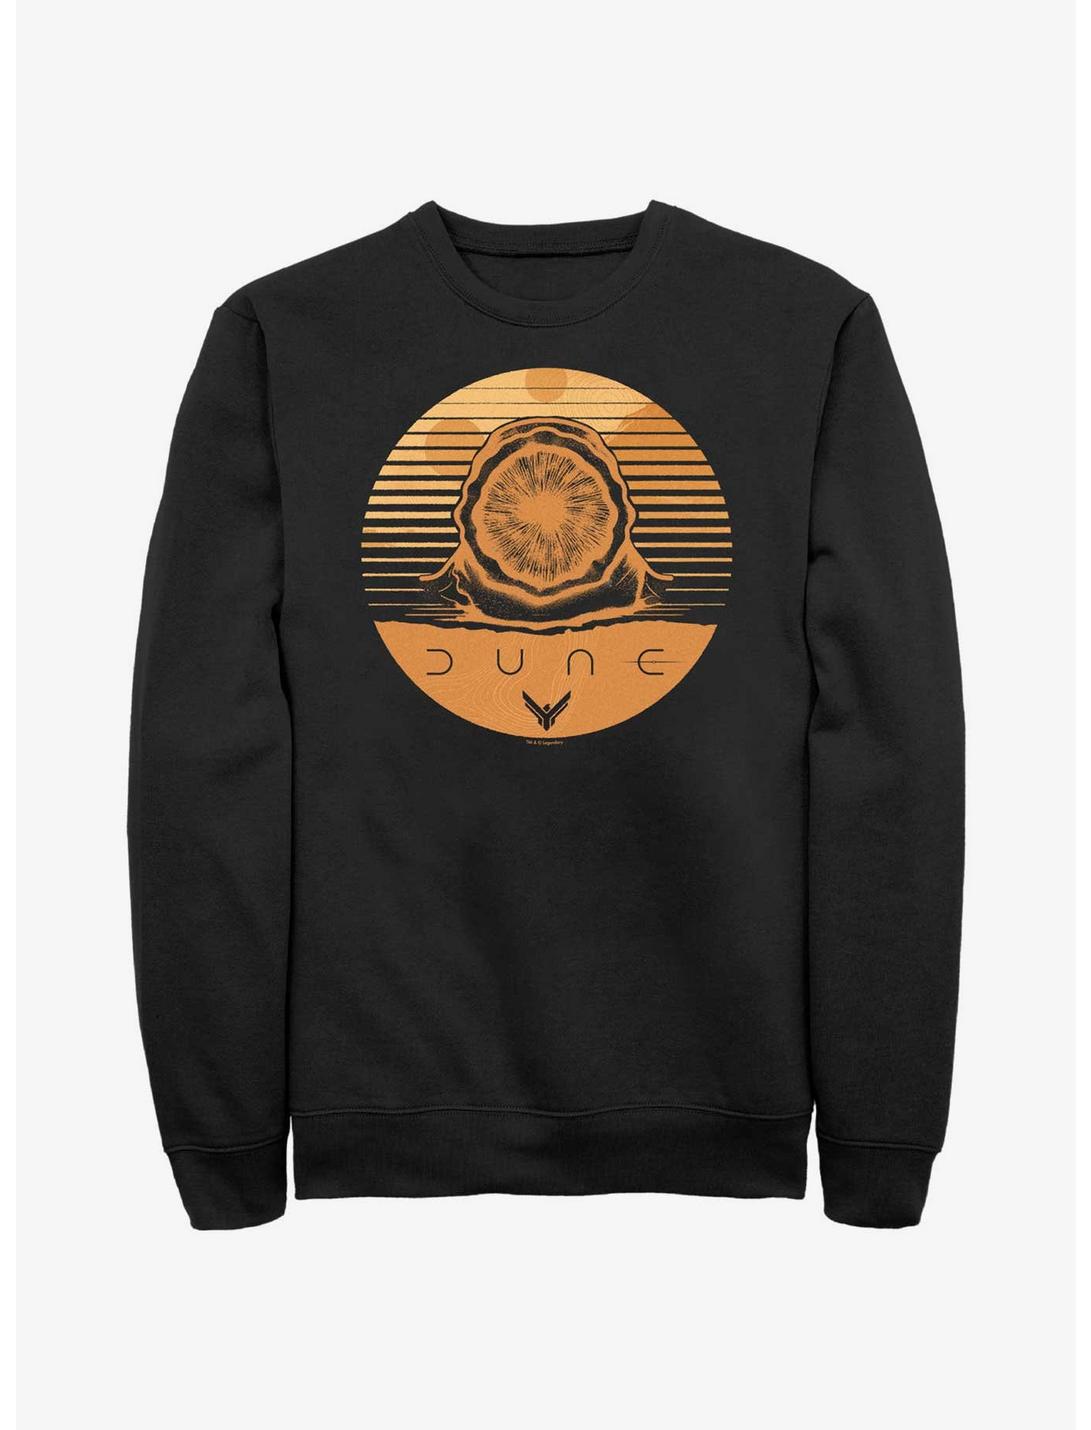 Dune: Part Two Arrakis Sandworm Stamp Sweatshirt, BLACK, hi-res